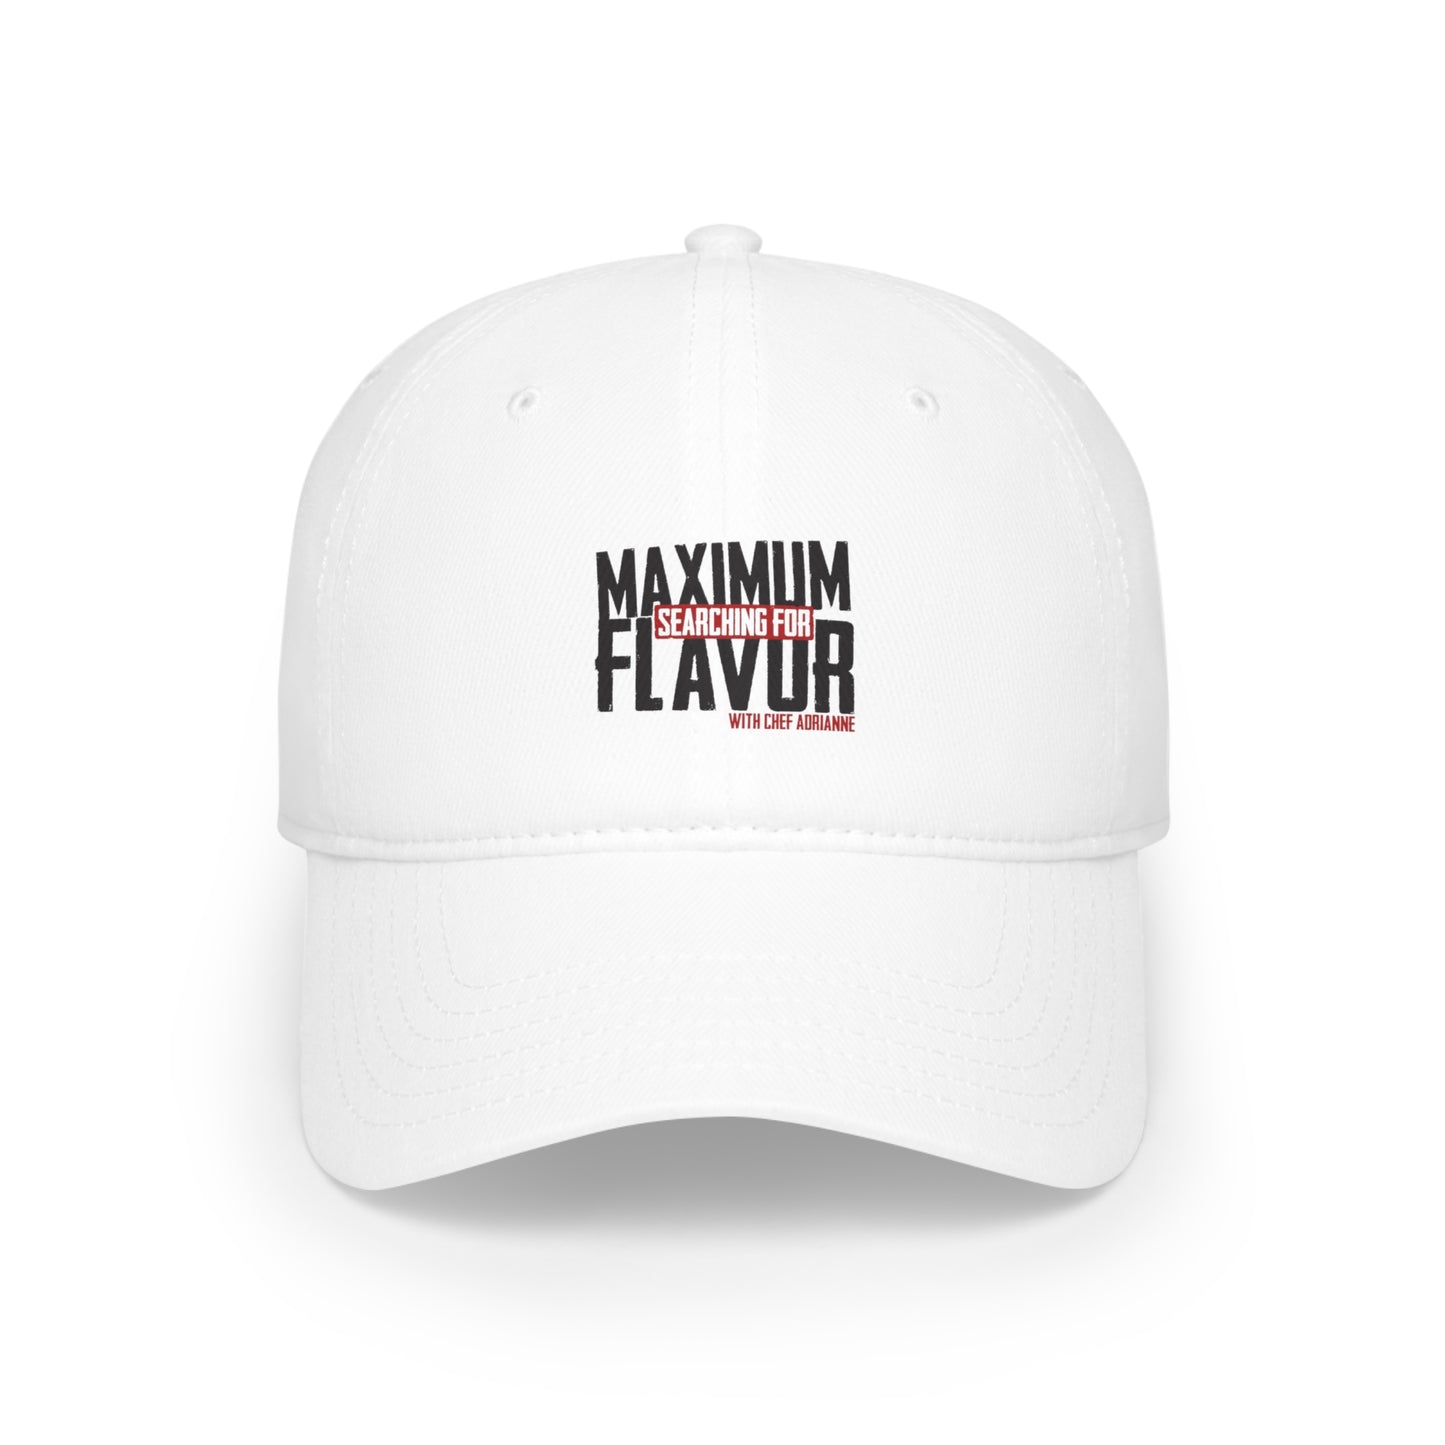 Searching for Maximum Flavor Low Profile Baseball Cap